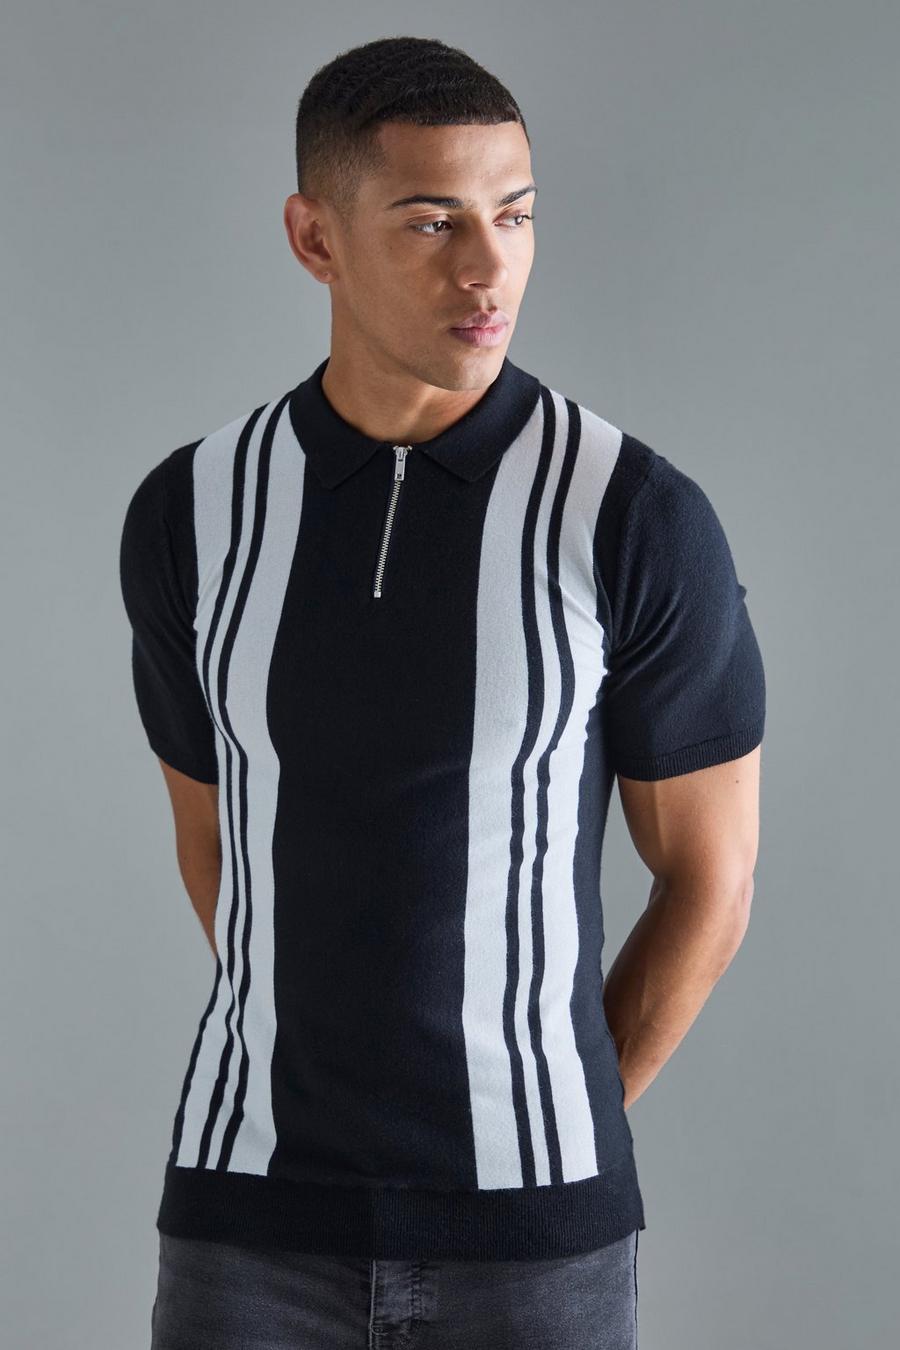 Kurzärmliges Muscle-Fit Poloshirt mit Streifen, Black